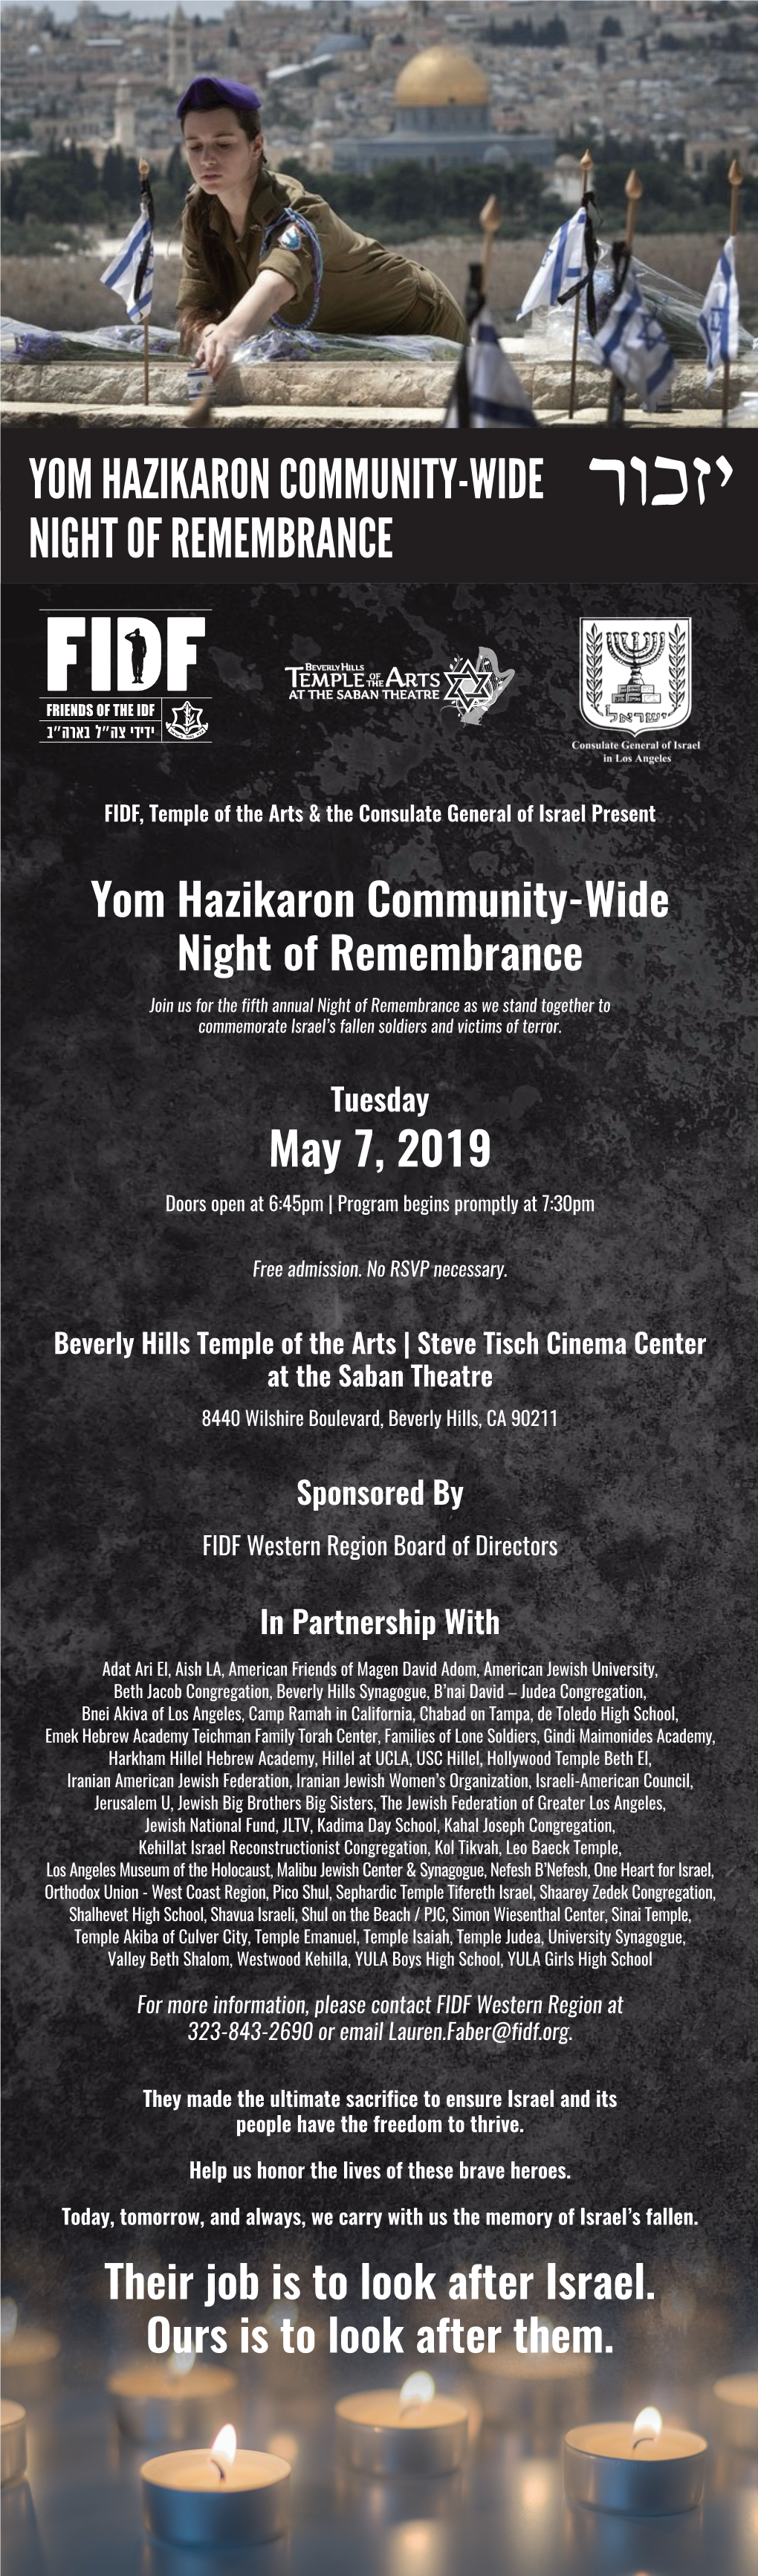 Yom Hazikaron Community-Wide Night of Remembrance